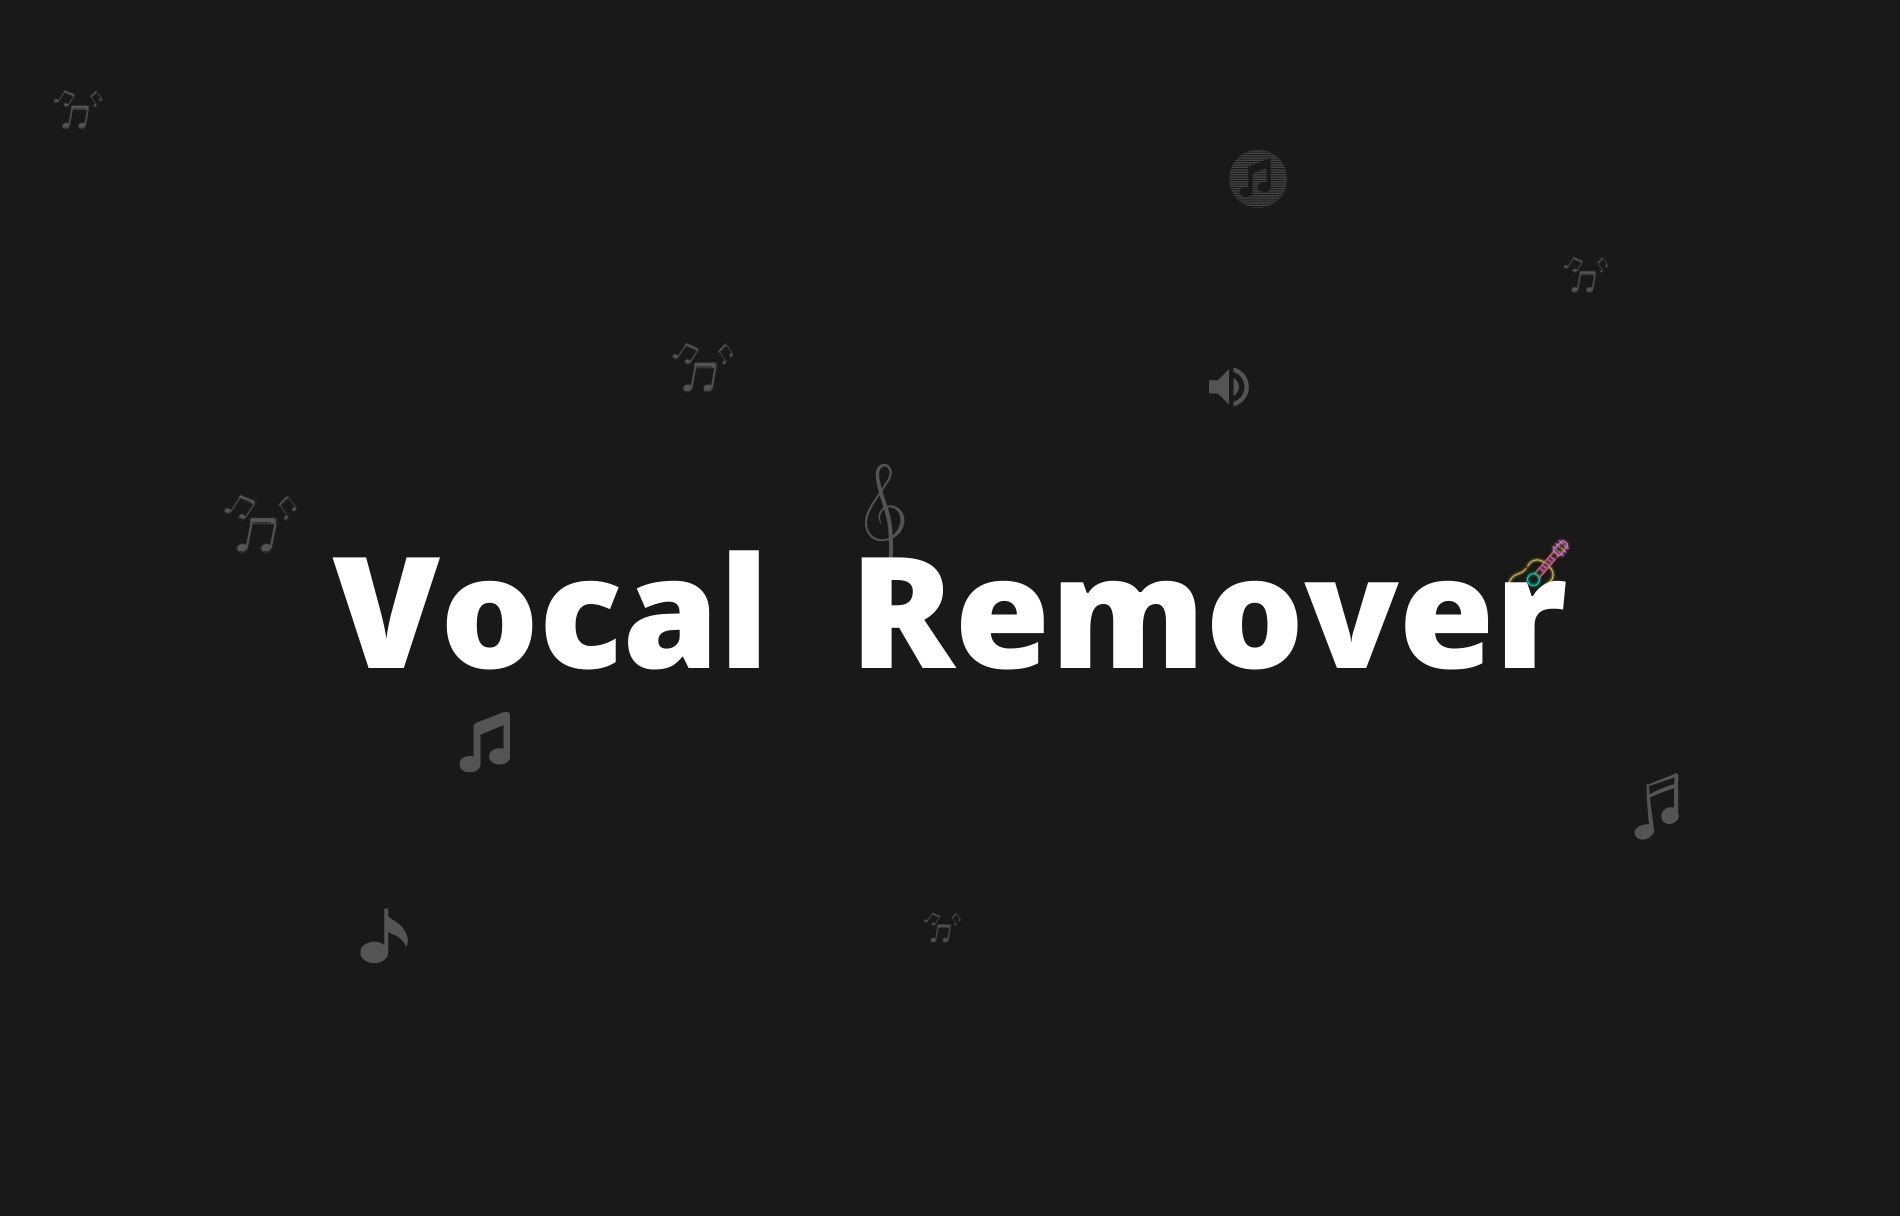 Vokal remover